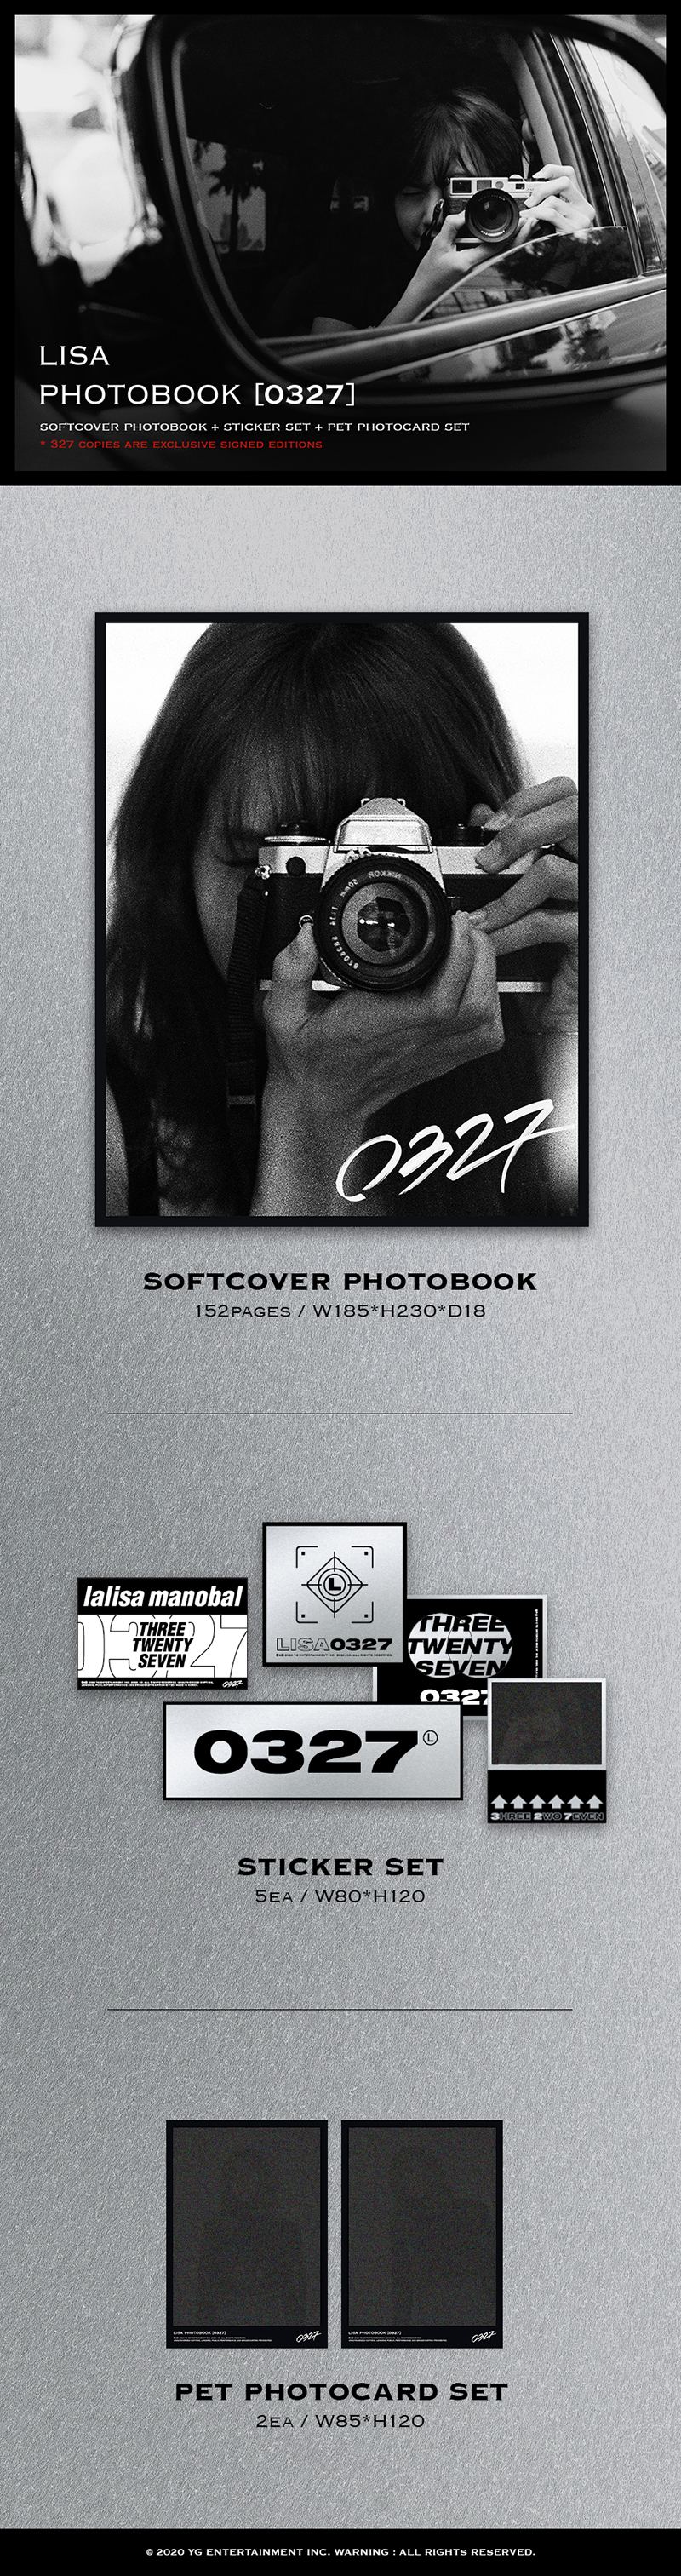 BLACKPINK リサ LISA photobook 0327 トレカ - K-POP/アジア